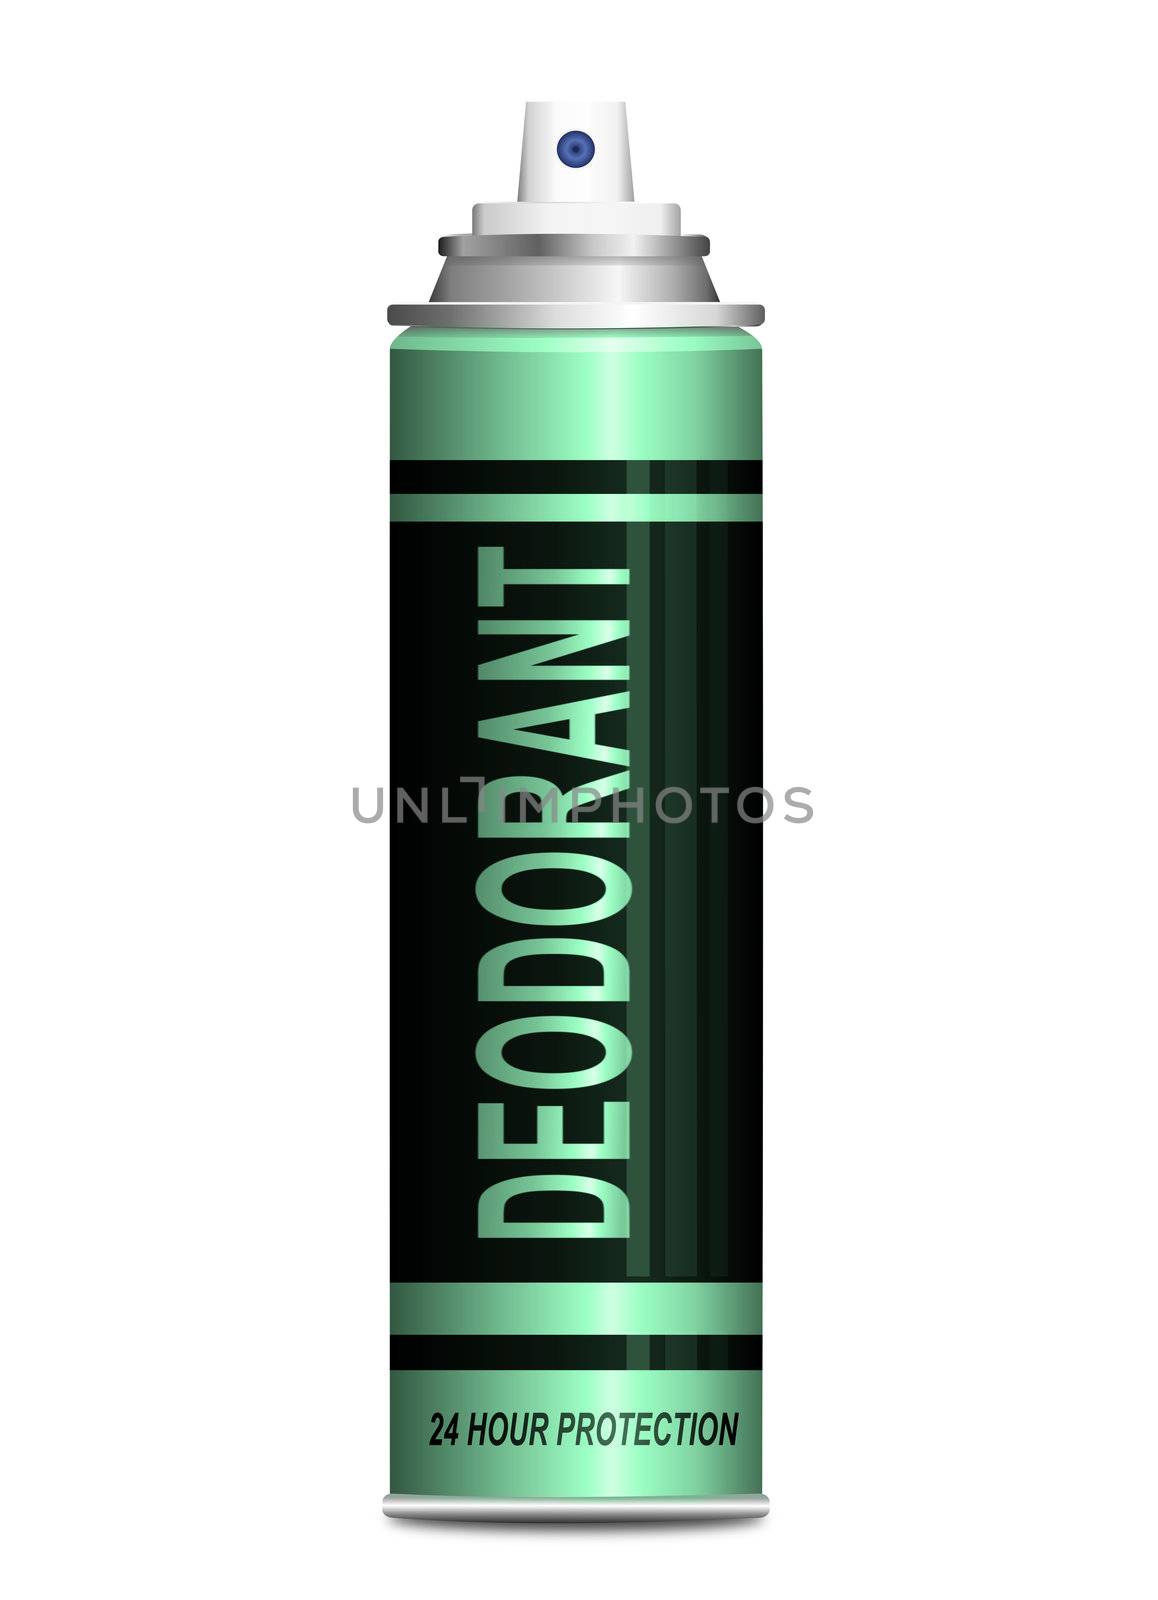 Deodorant. by 72soul